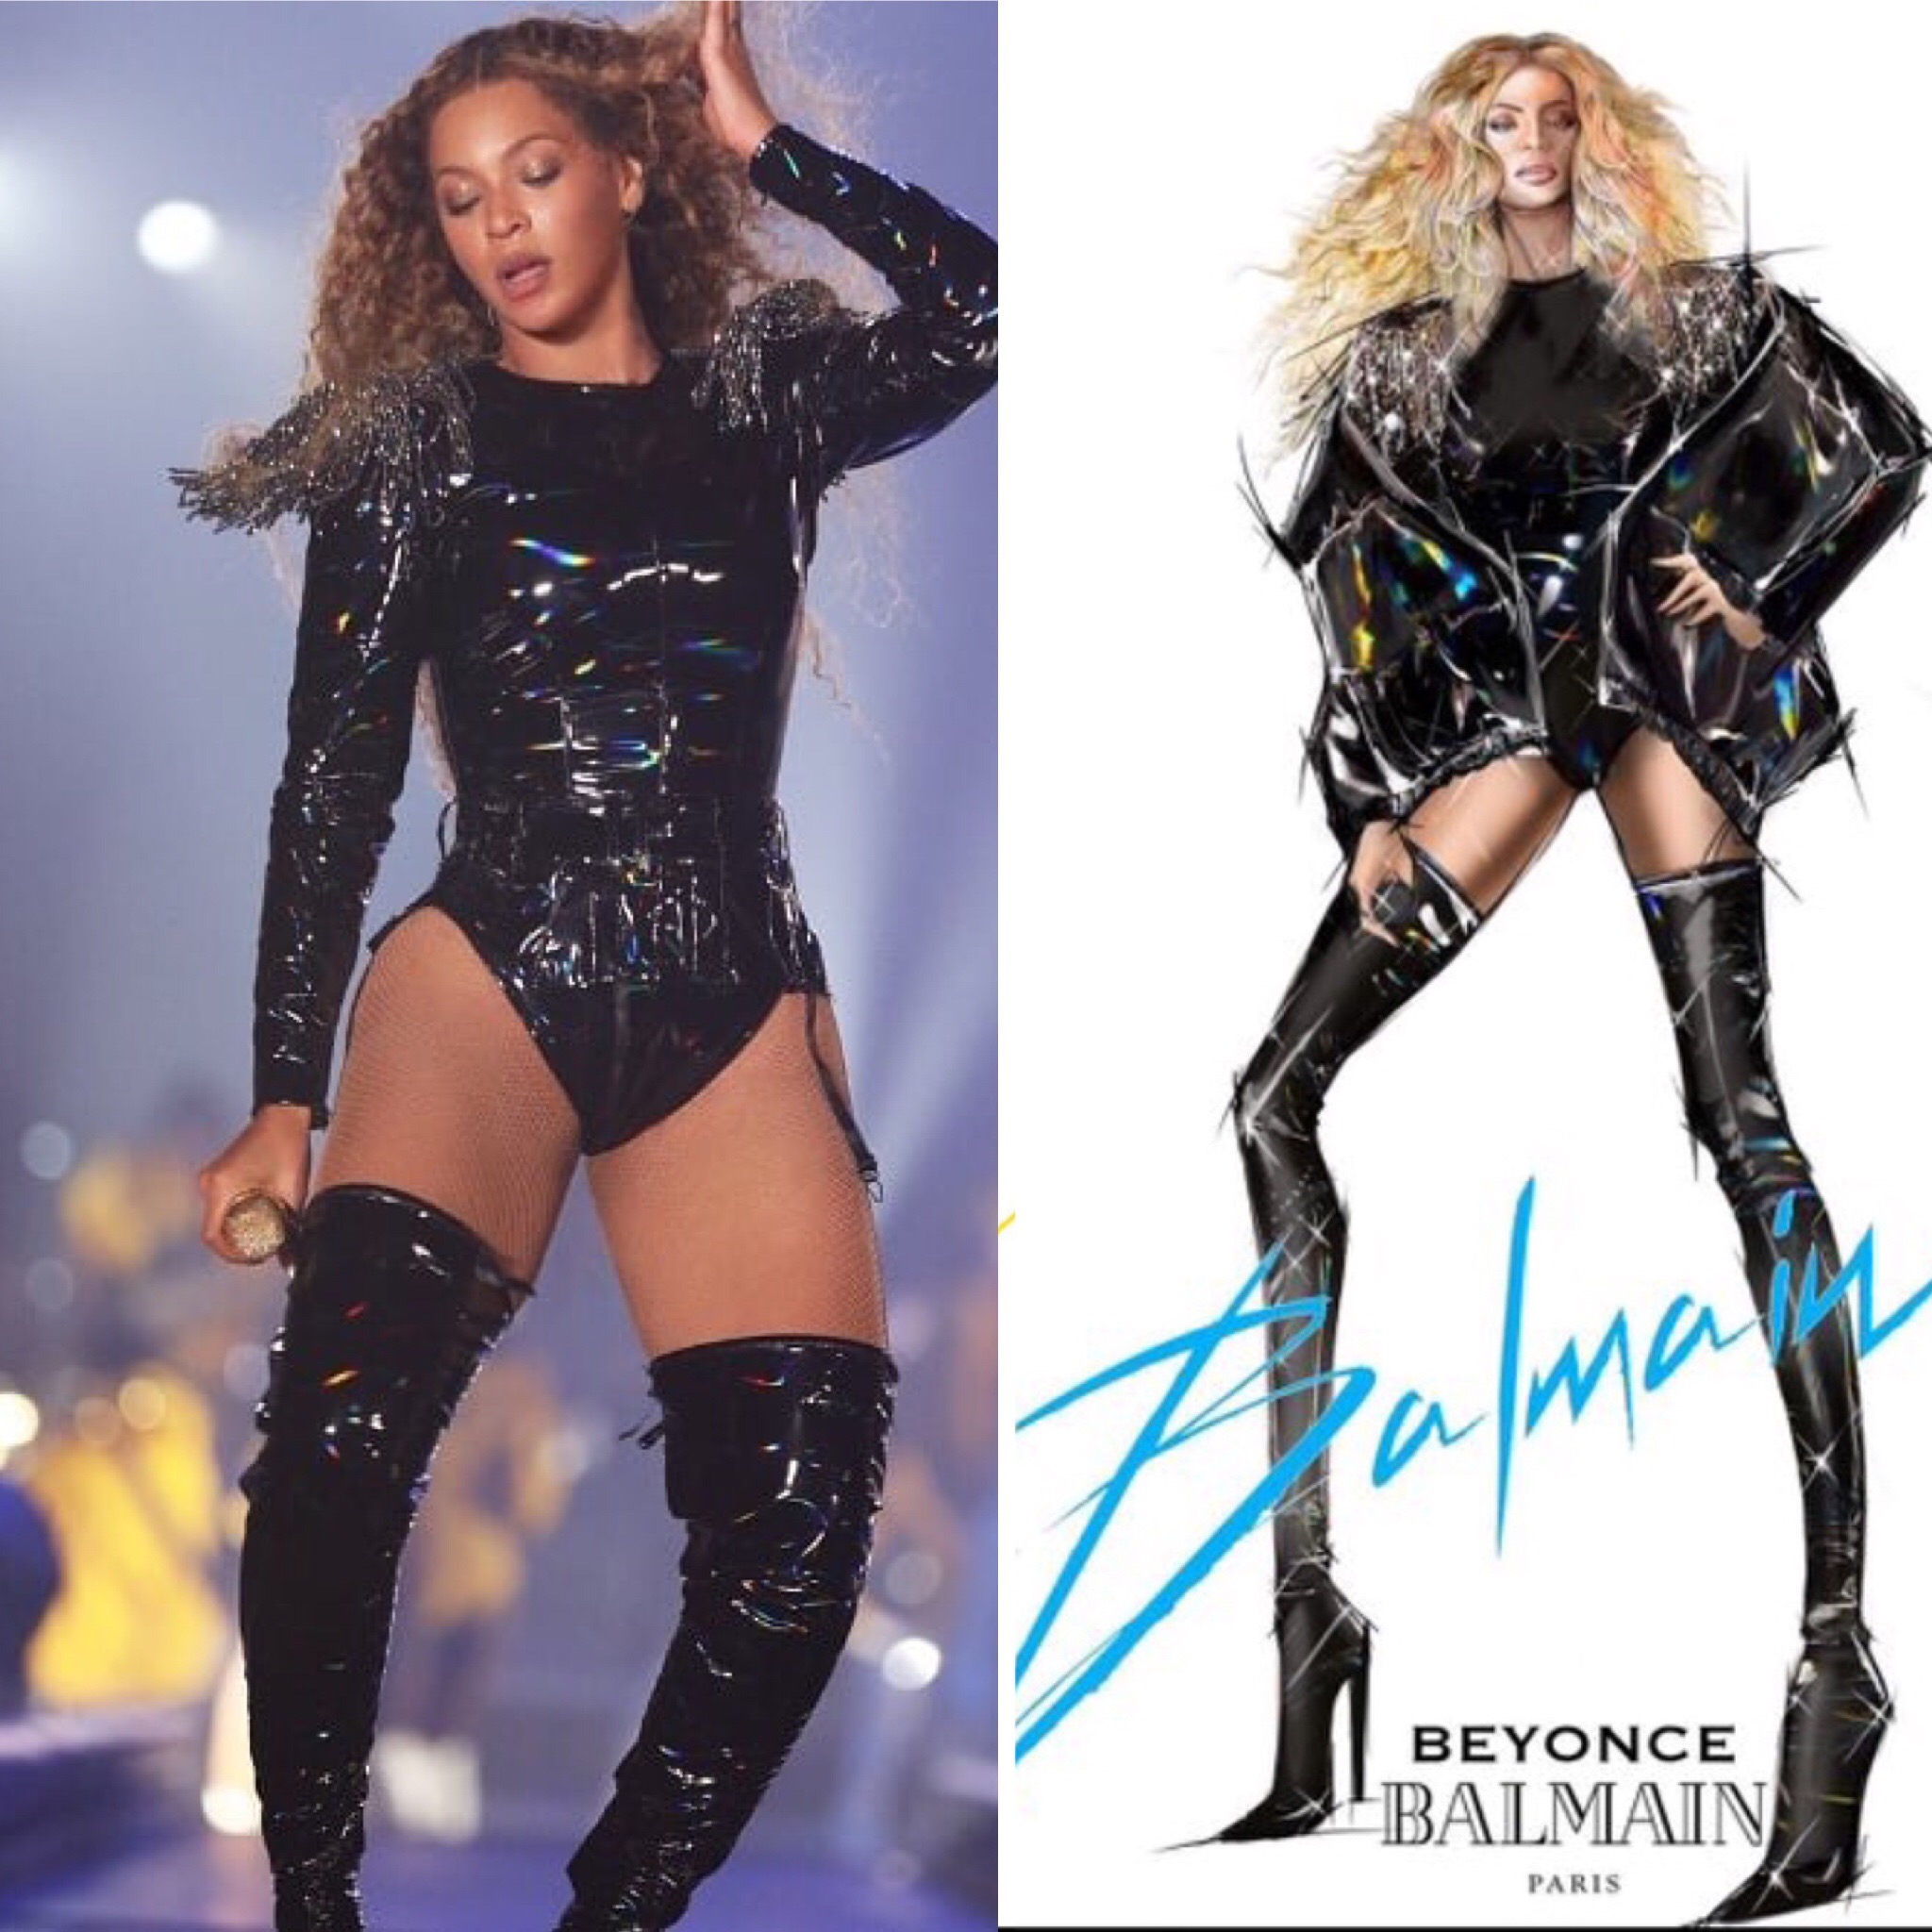 Beyonce Wears Custom Balmain To Headline Coachella aka Beychella + Appearances by Solange, Michelle Williams, Kelly Rowland, More! – Fashion Bomb Daily